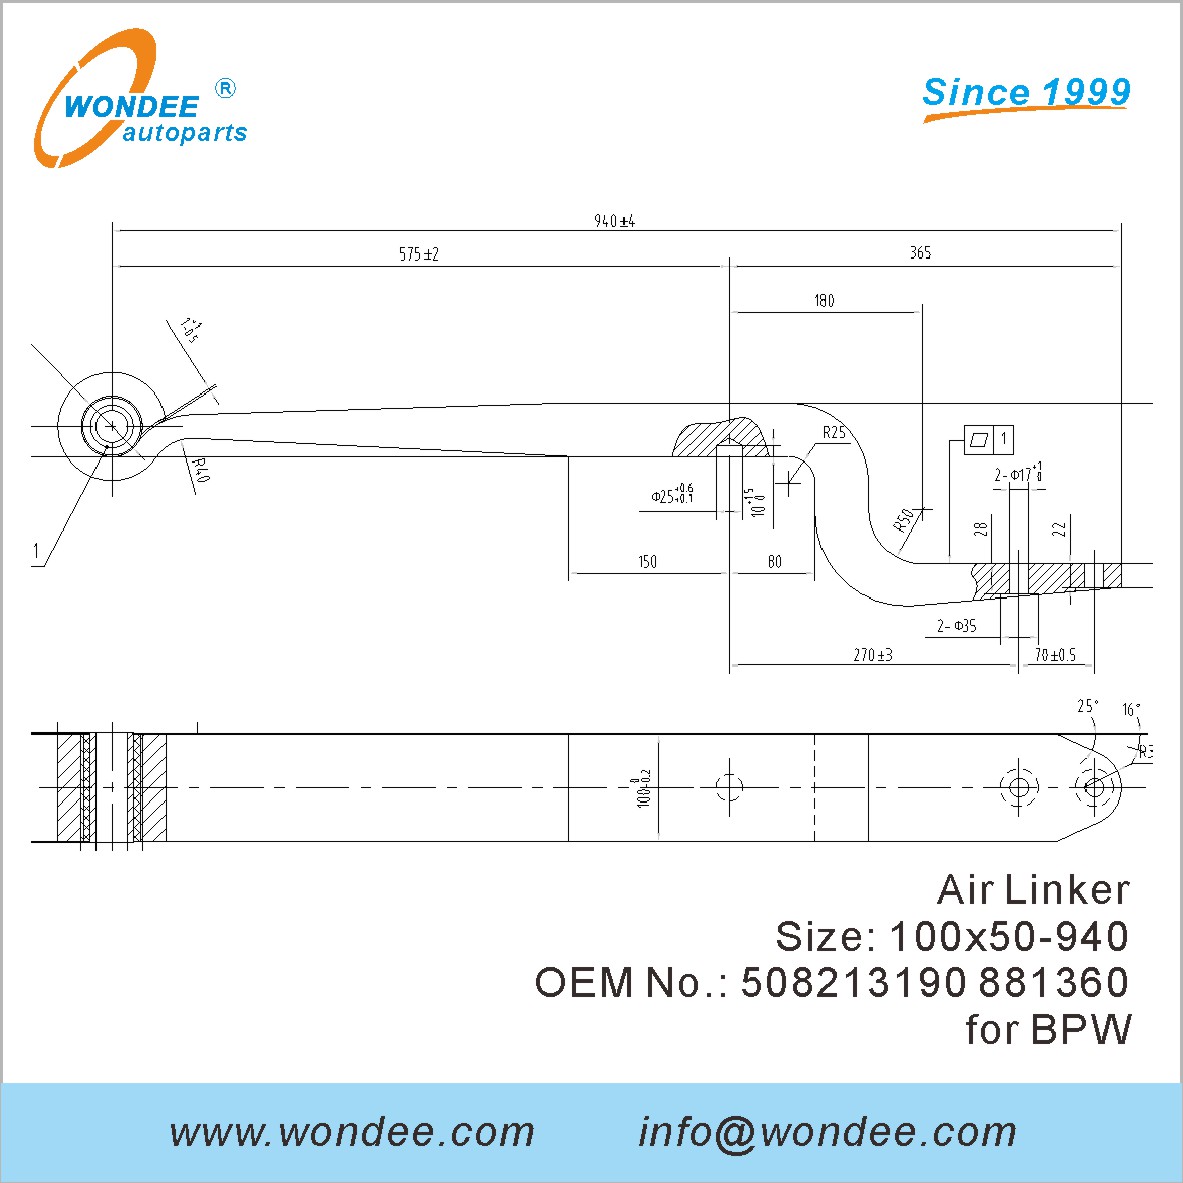 WONDEE Autoparts Air Linker OEM 508213190 881360 for BPW